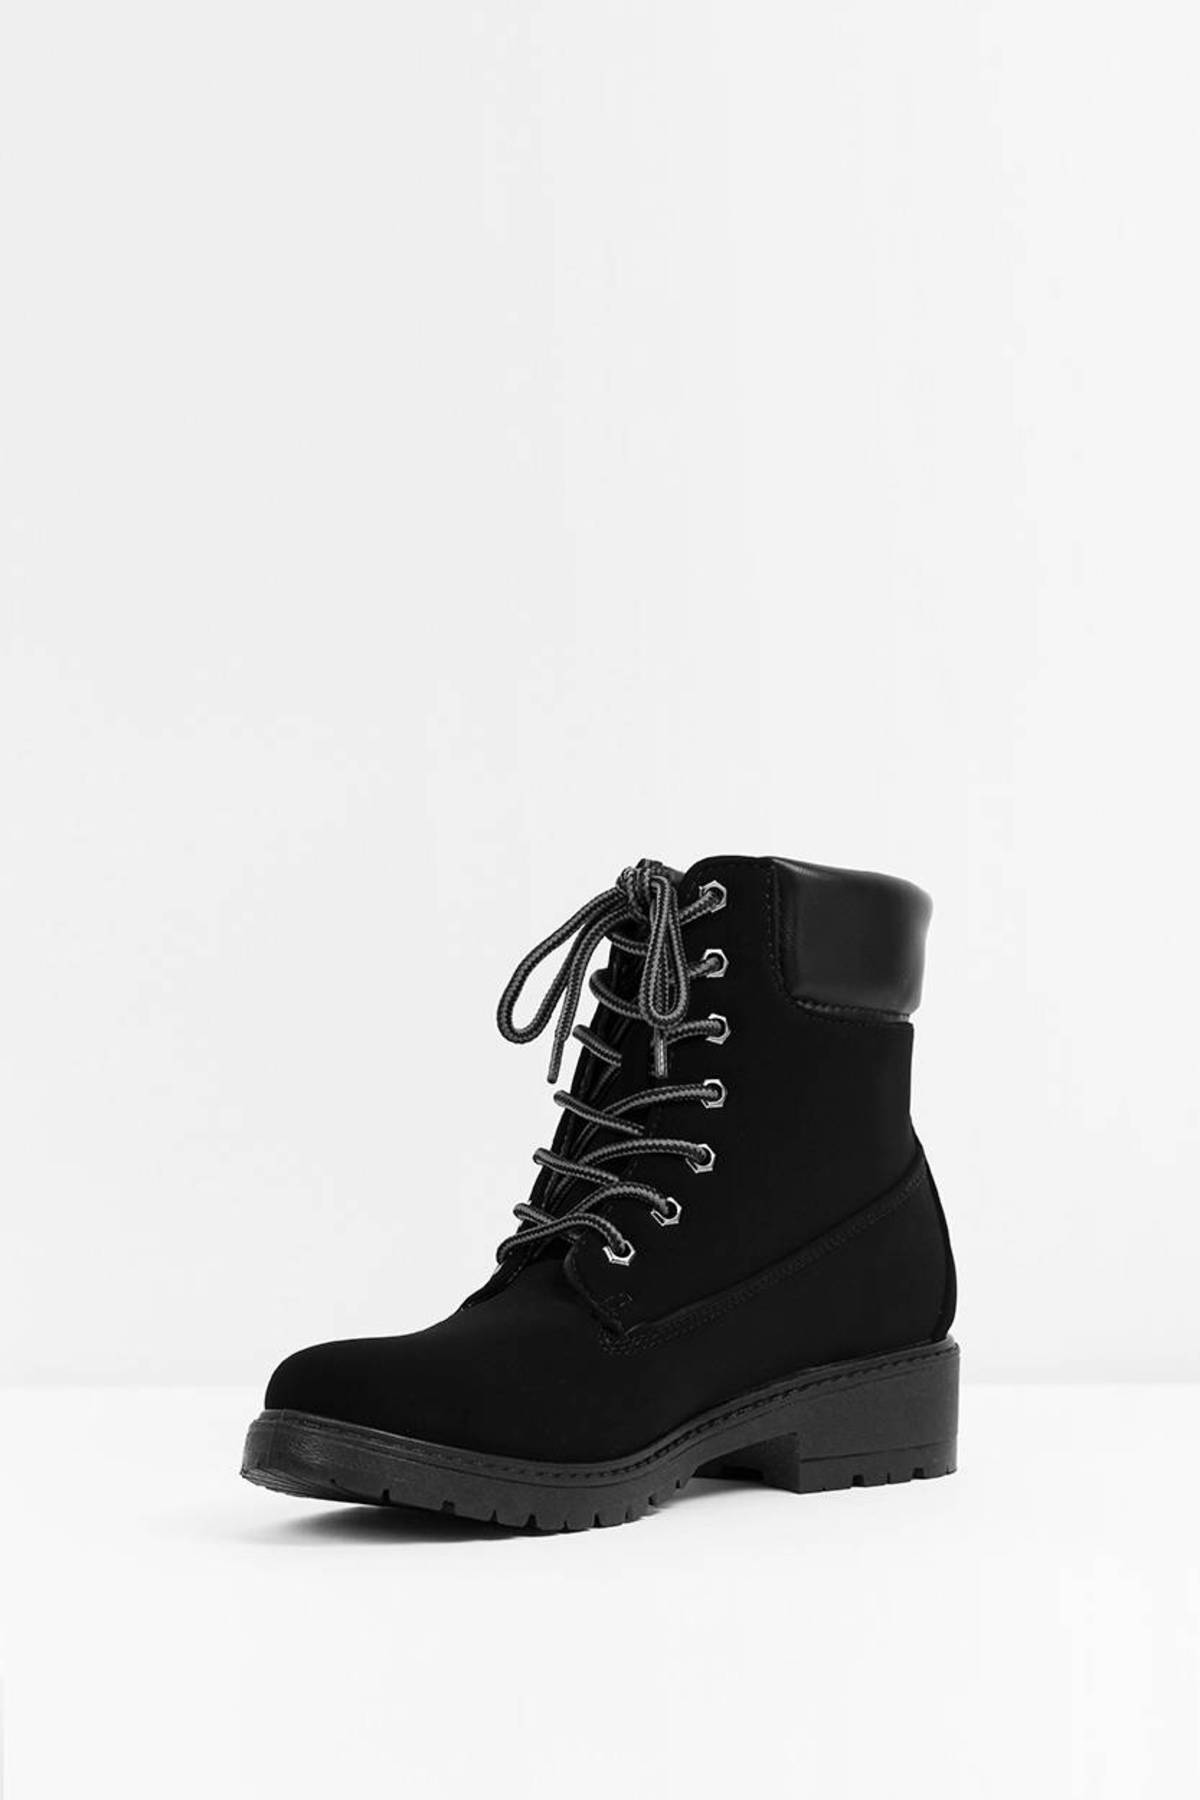 Lucas Lug Sole Boots in Black - $74 | Tobi US